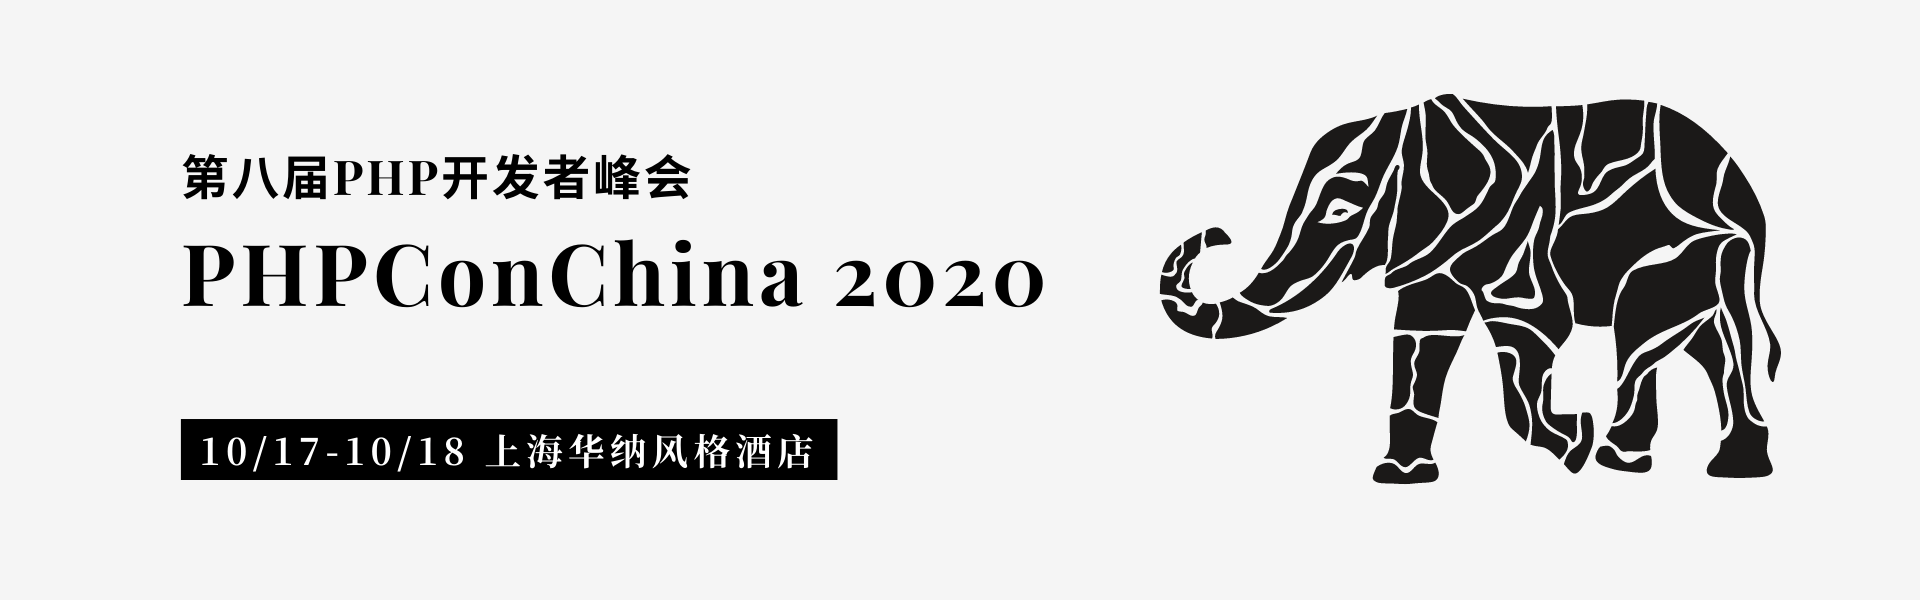 第八届PHP开发者峰会PHPConChina 2020